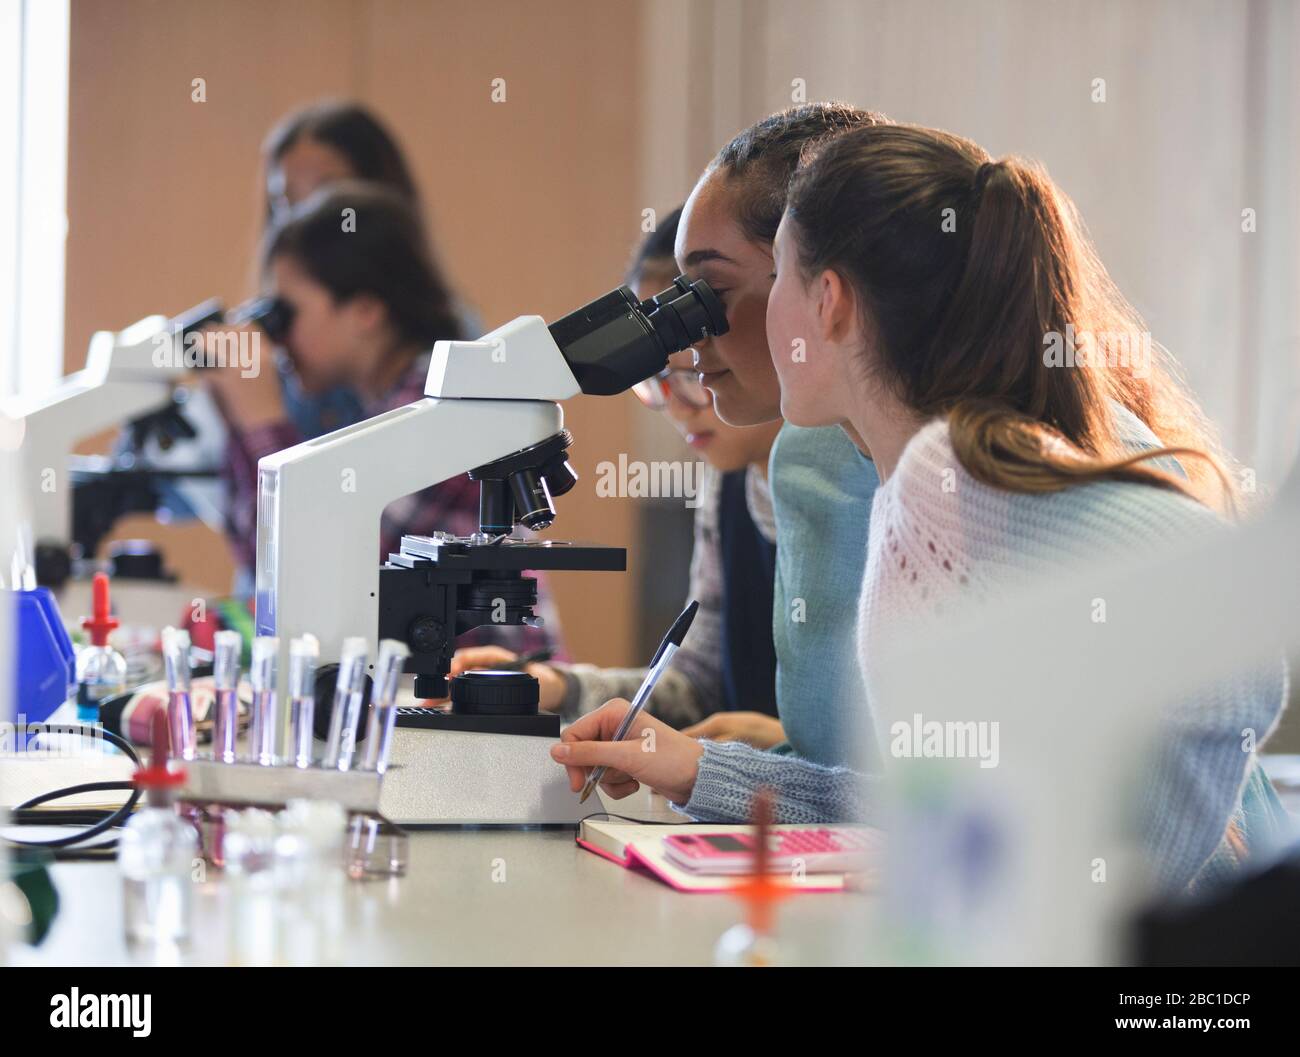 Girl students using microscope, conducting scientific experiment in laboratory classroom Stock Photo